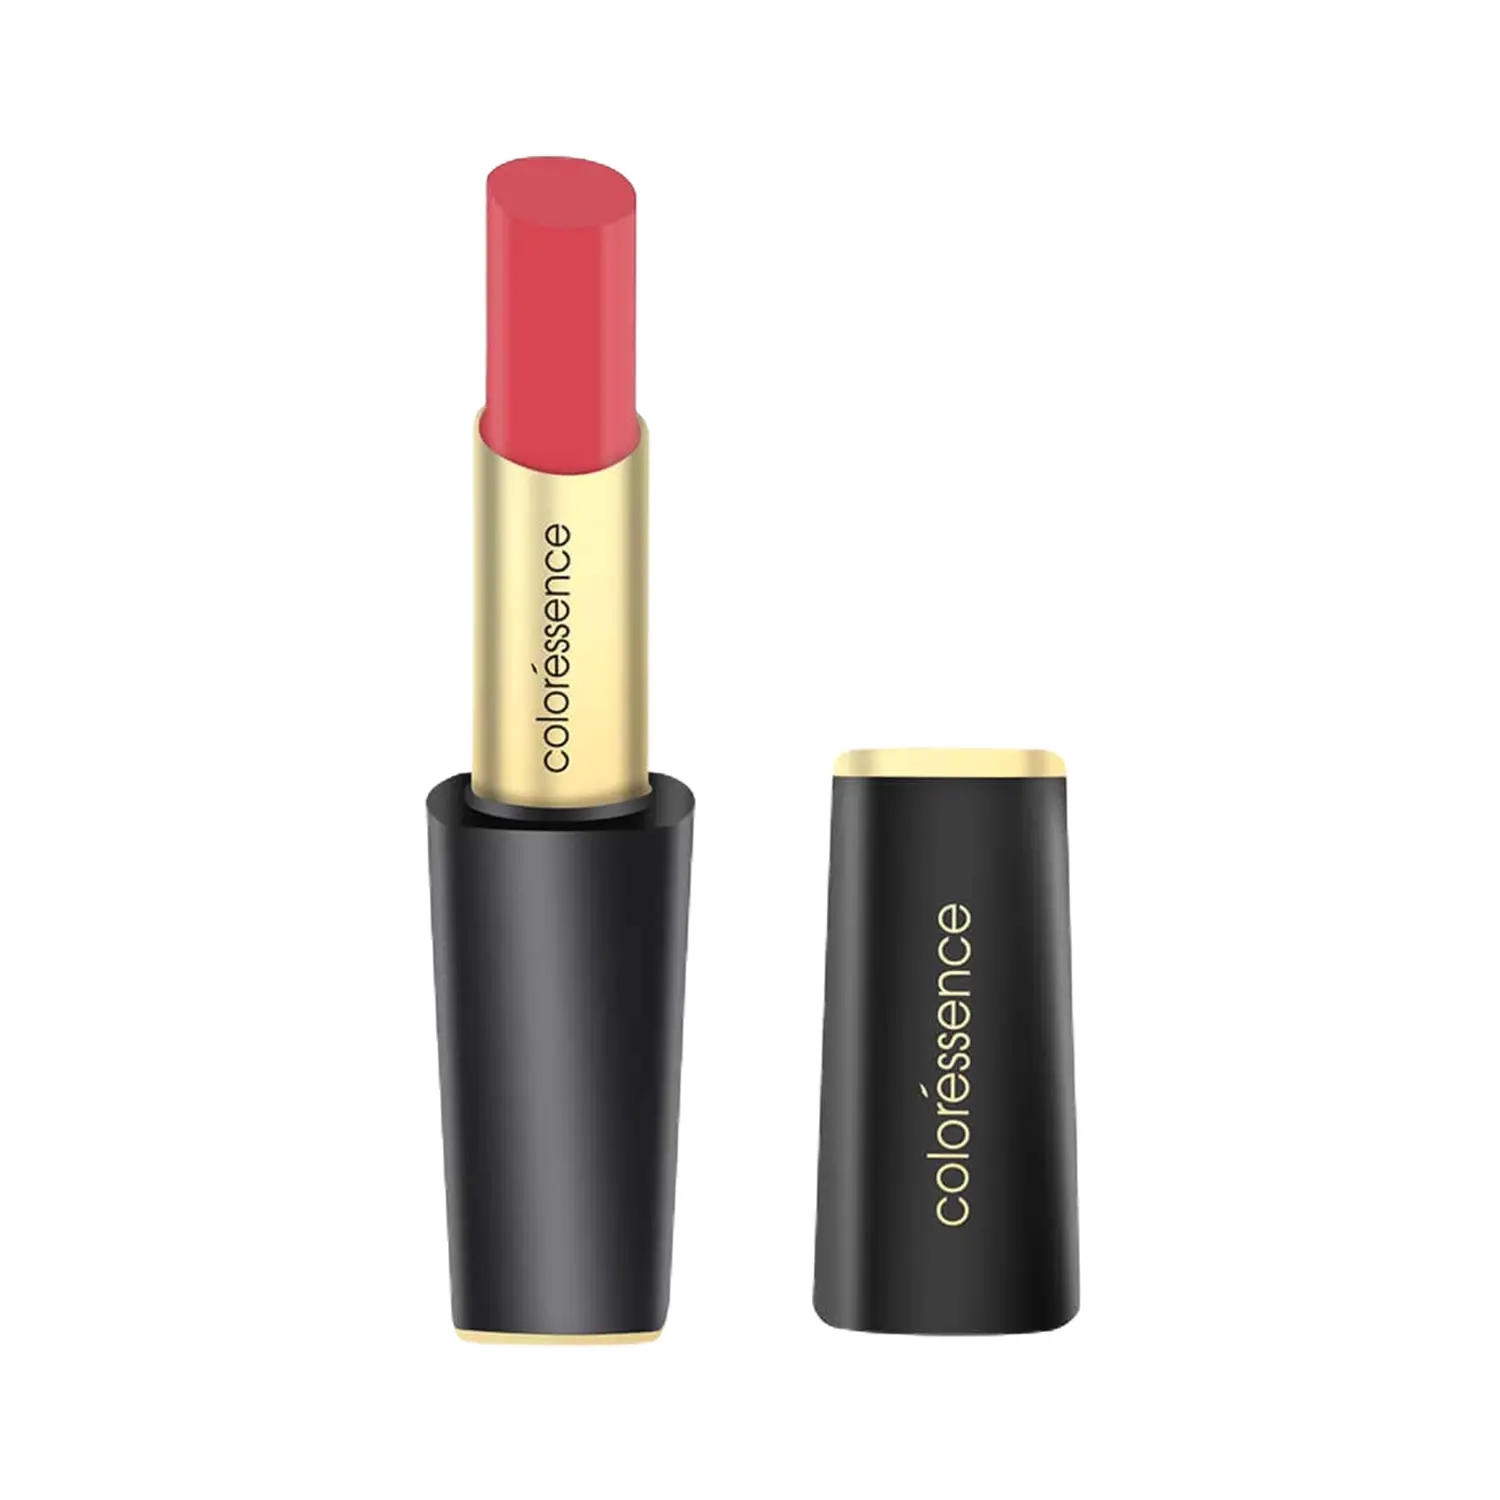 Coloressence Intense Long Wear Lip Color Glossy Lipstick - Peach Fizz (2.5g)